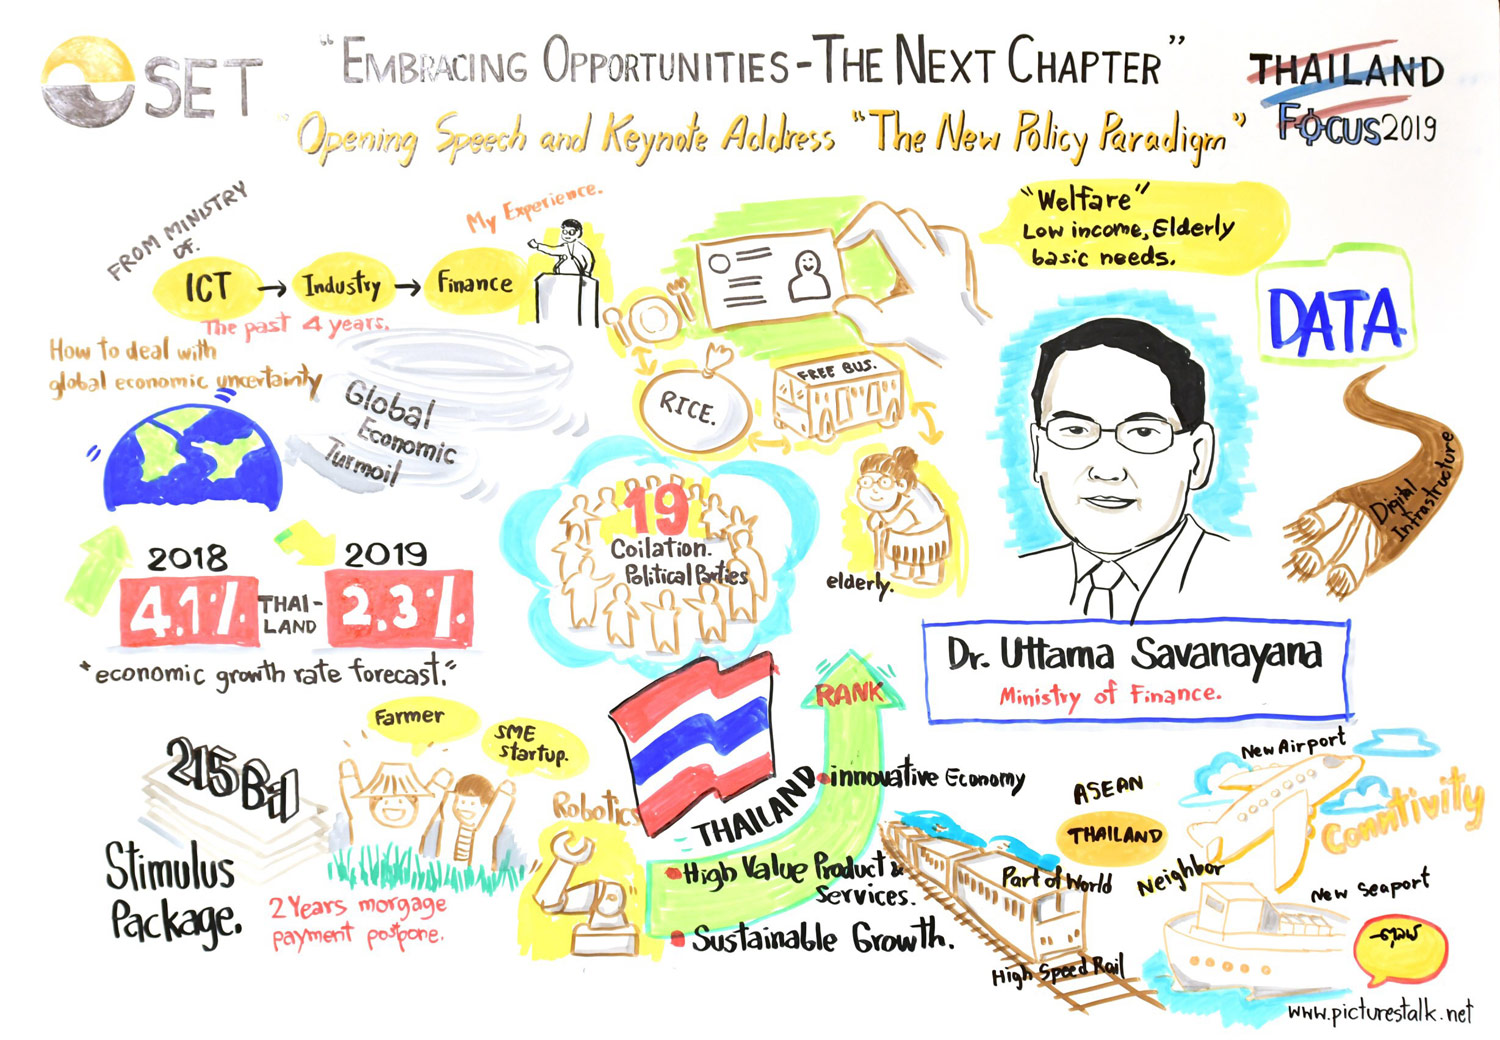 Thailand Focus 2019 - Opening Speech and Keynote Address The New Policy Paradigm - Dr. Uttama Savanayana